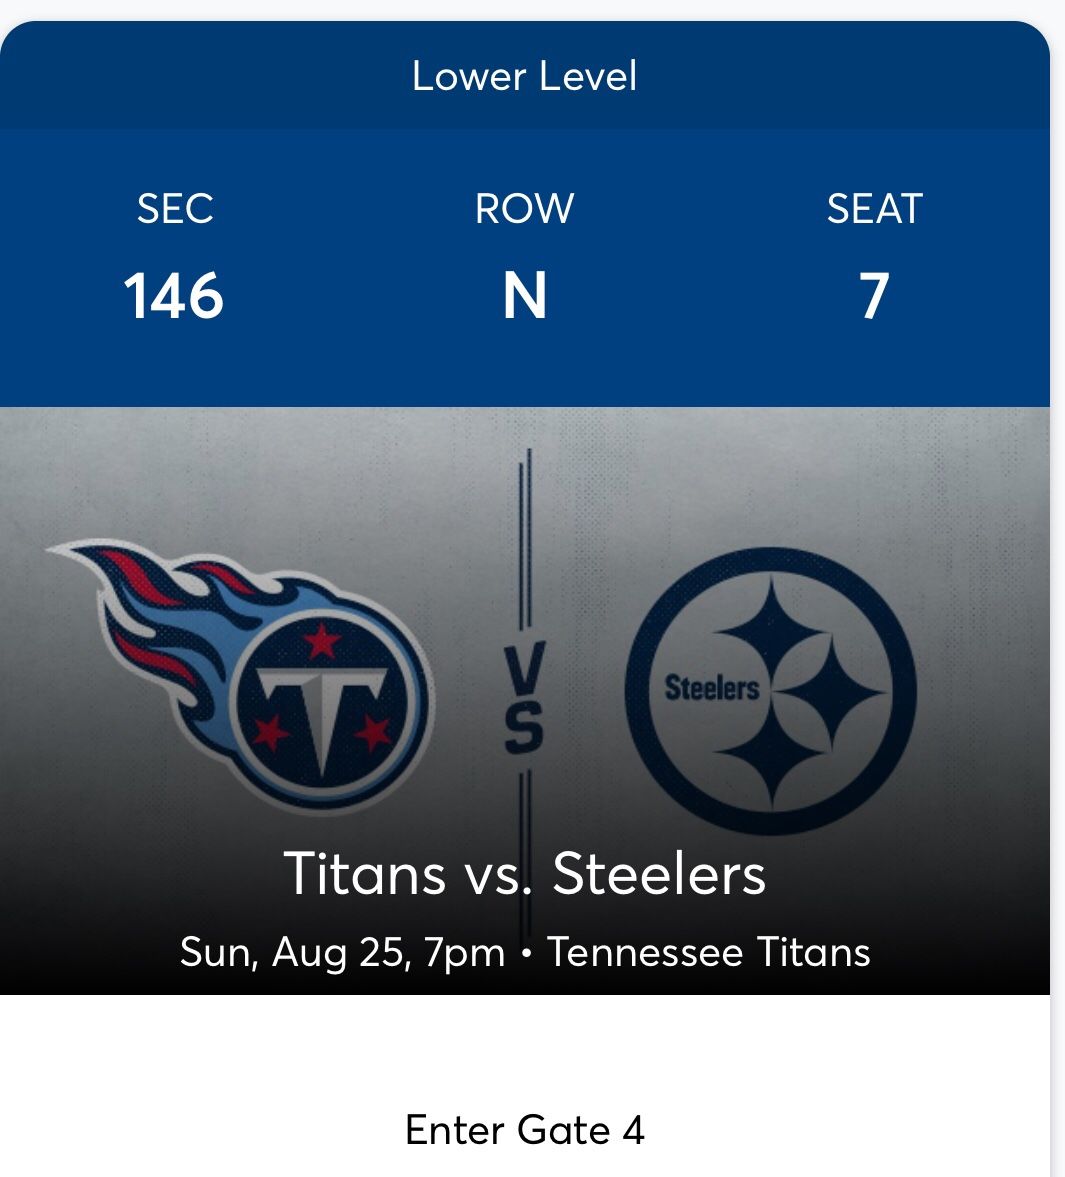 Titans vs Steelers Tickets $98 each